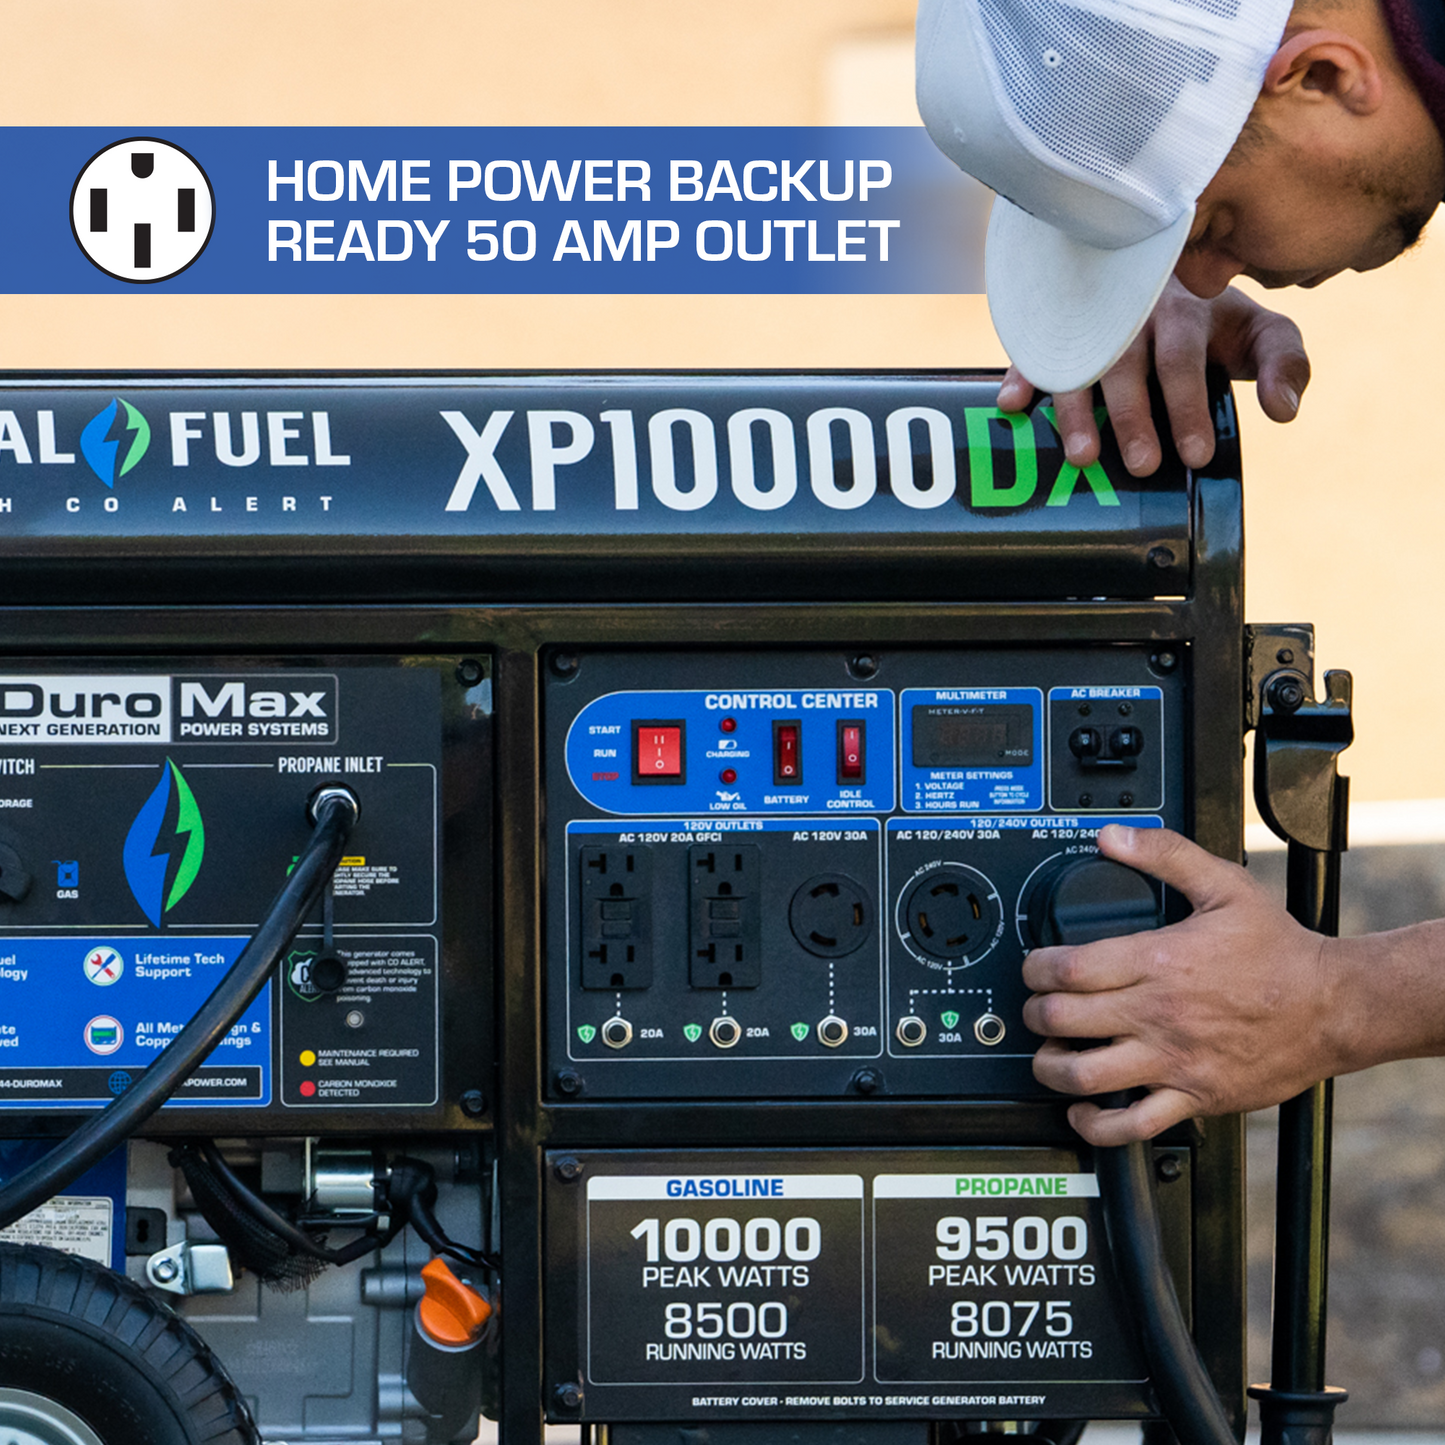 10,000 Watt Dual Fuel Portable Generator w/ CO Alert